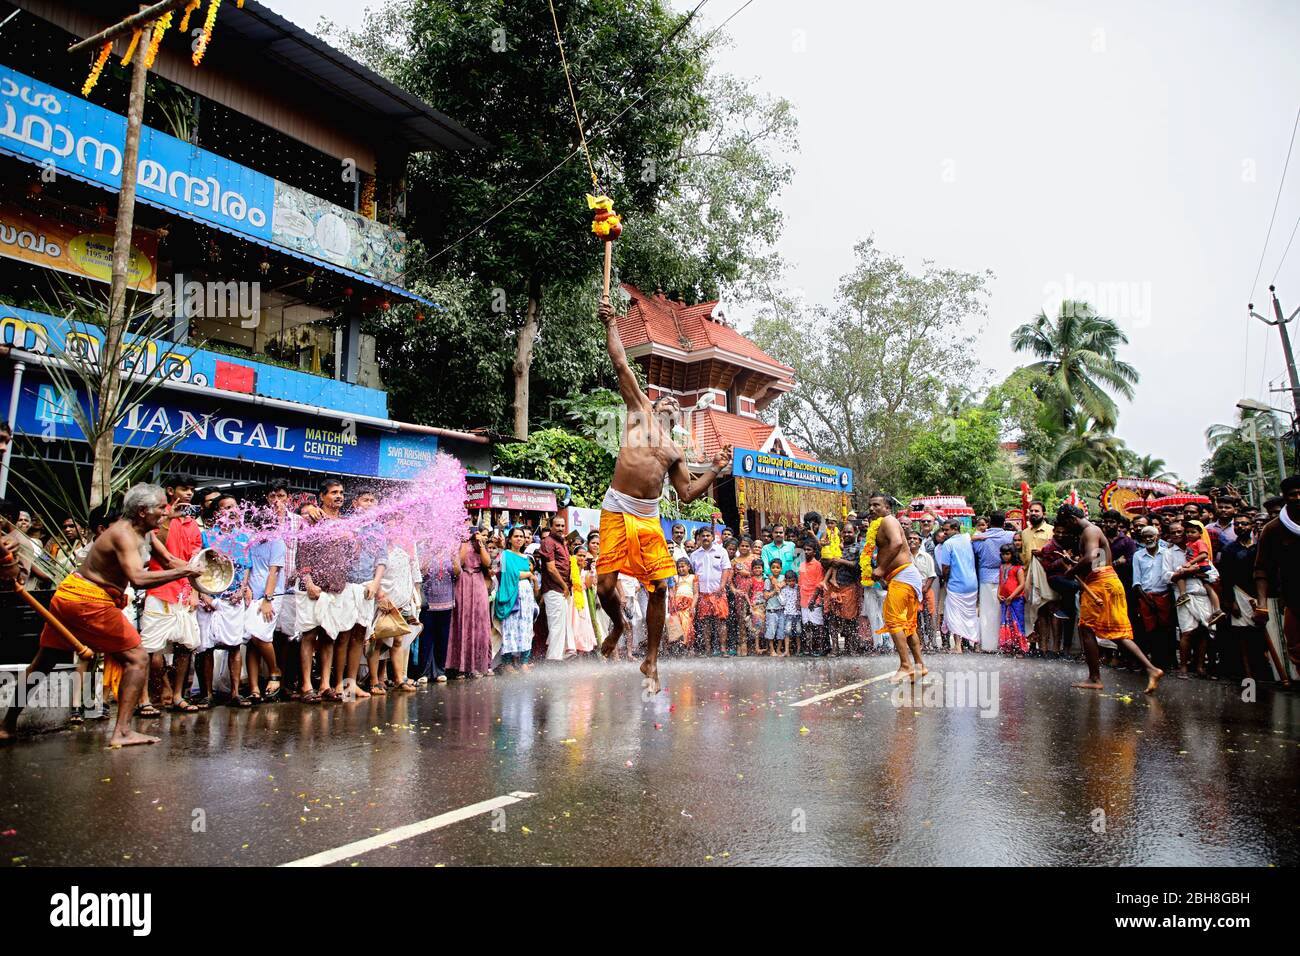 festivals in india,festivals kerala,dance forms kerala,kathakali,theyyam,pulikkali,tiger dance,onam,lgbt artists,colourful indian festival Stock Photo